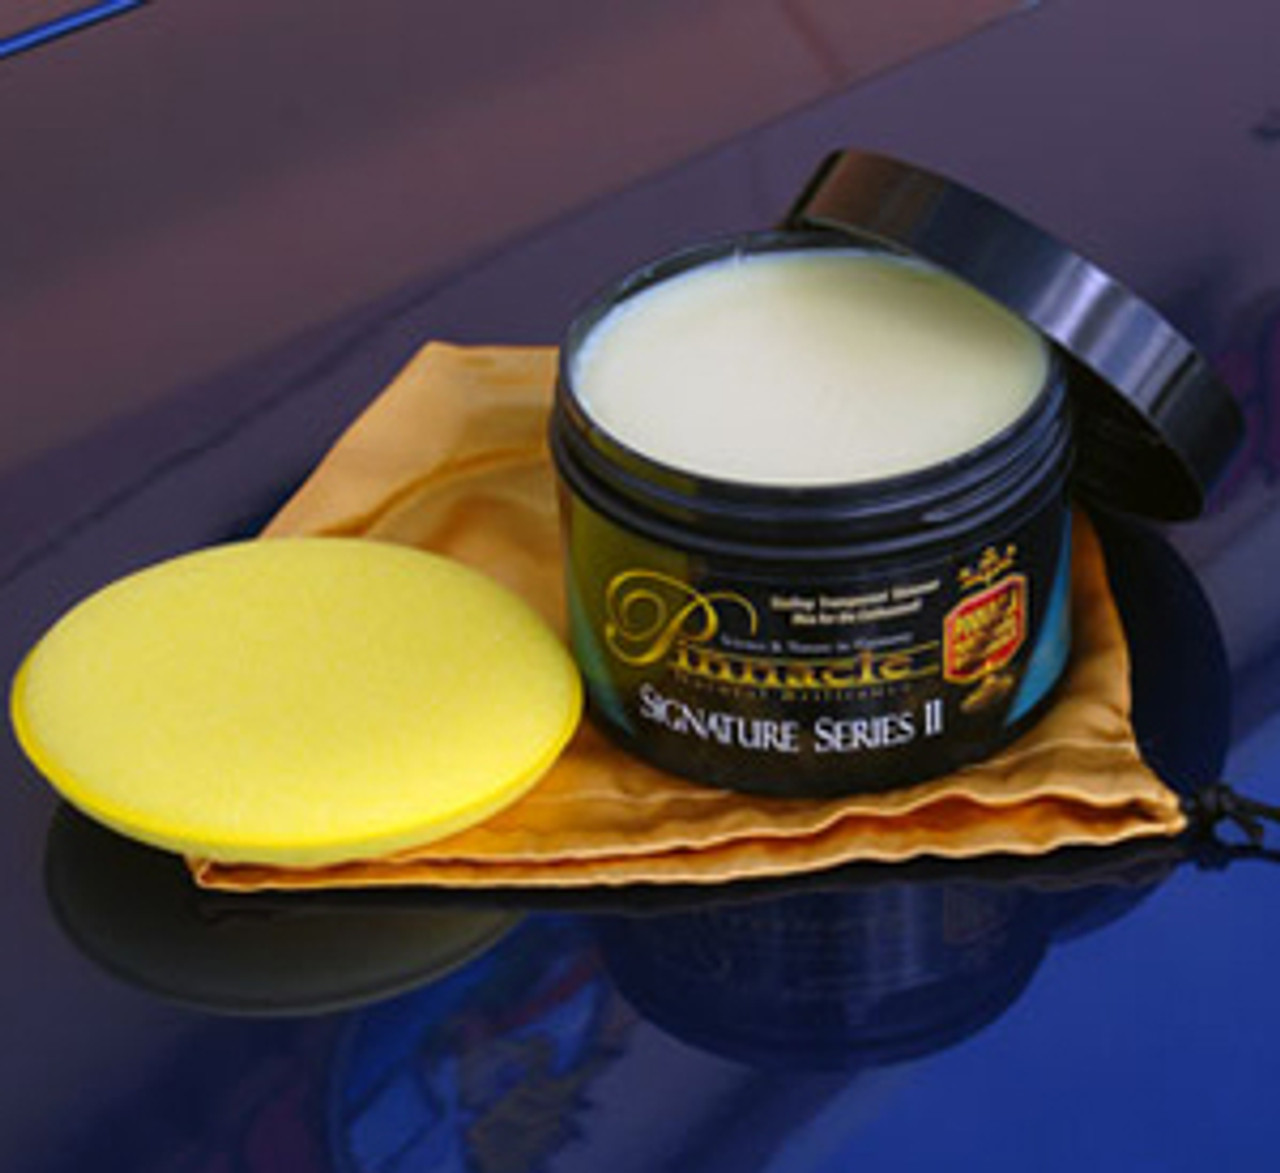 Souveran Sizzling Shine Kit, pinnacle car wax kit, pinnacle wax kit